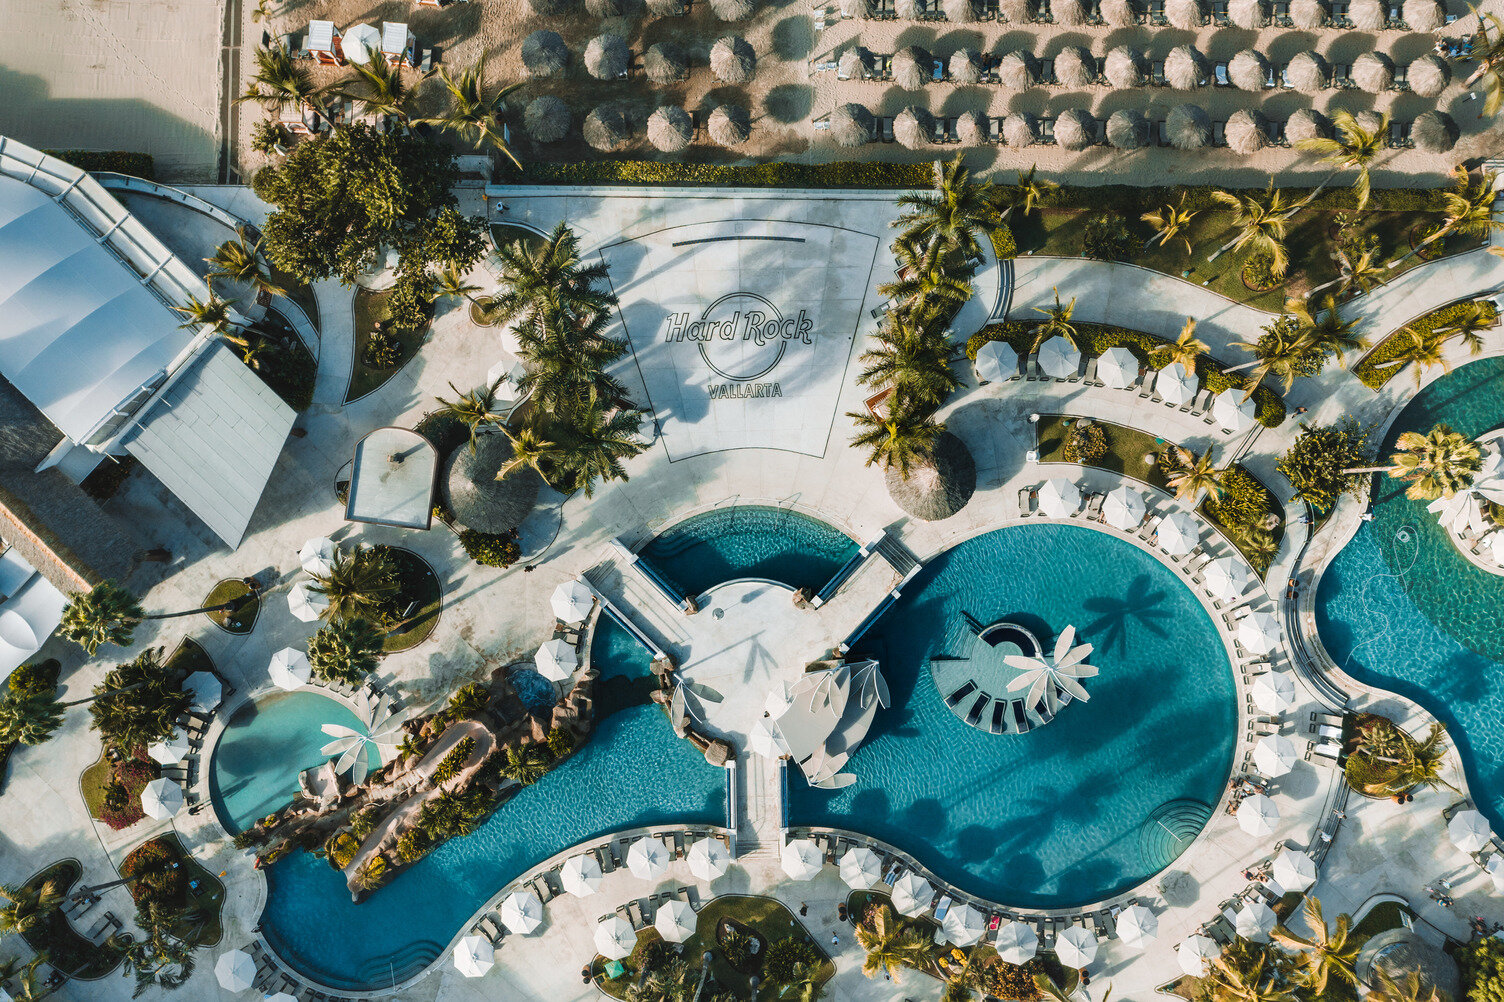 drone footage of the pool area of hard rock hotel vallarta